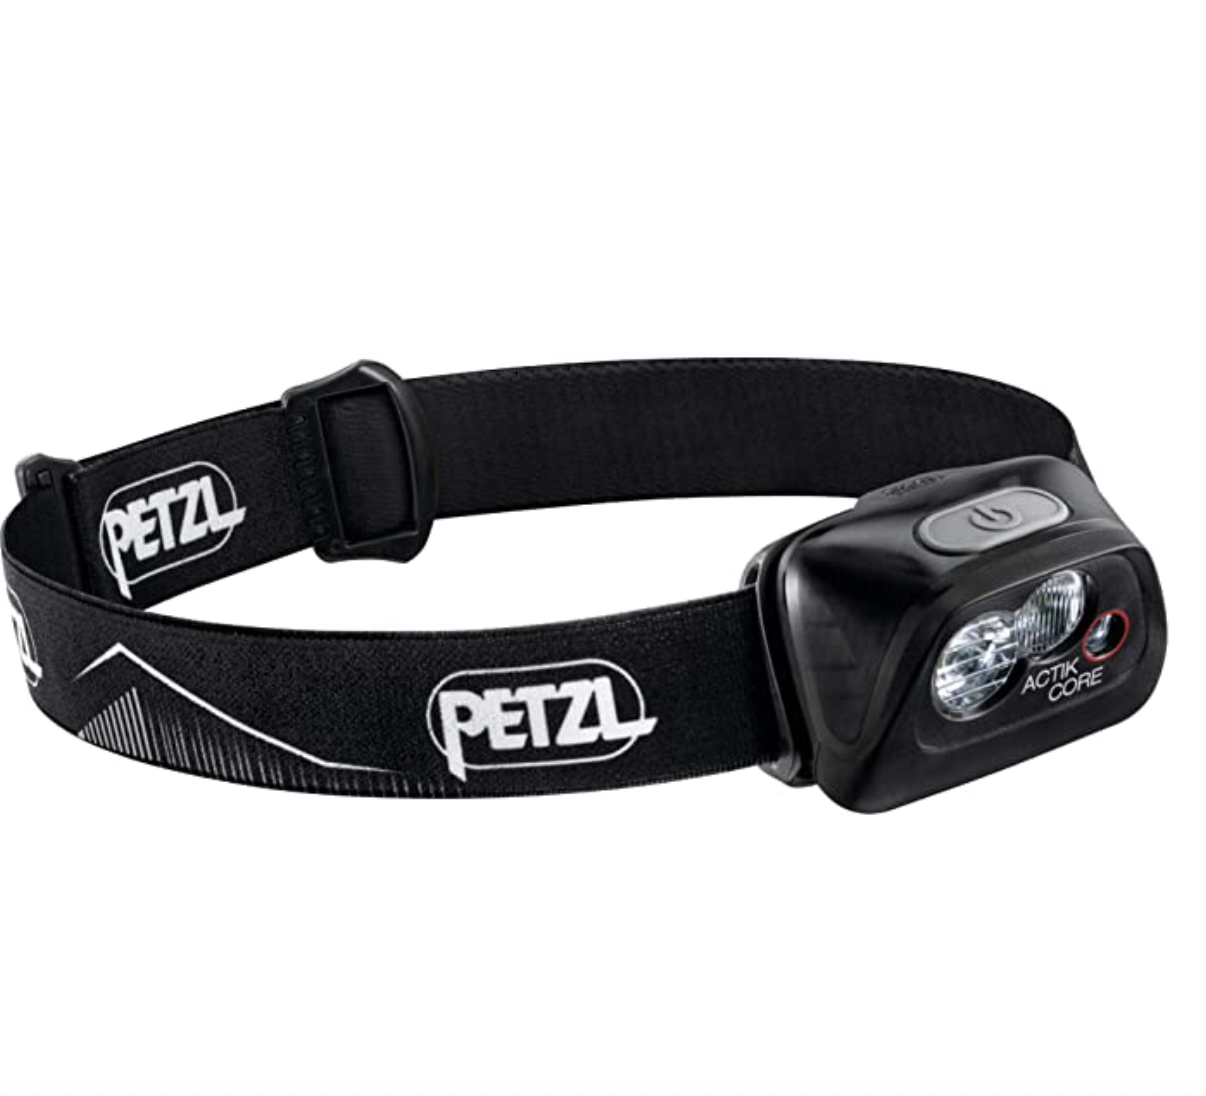 petzl headlamp useful gift for vanlifers